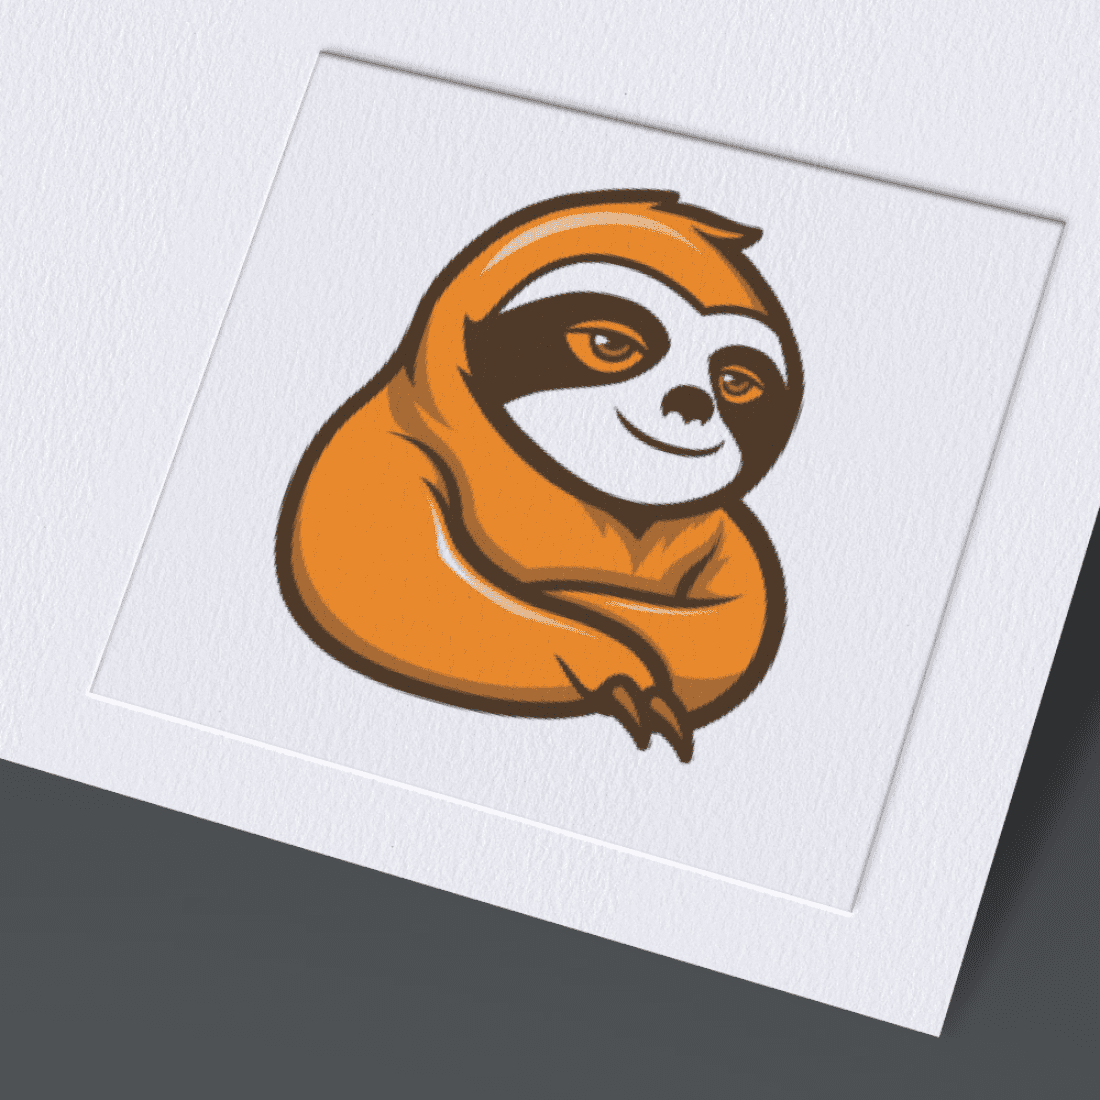 Sloth Logo cover image.